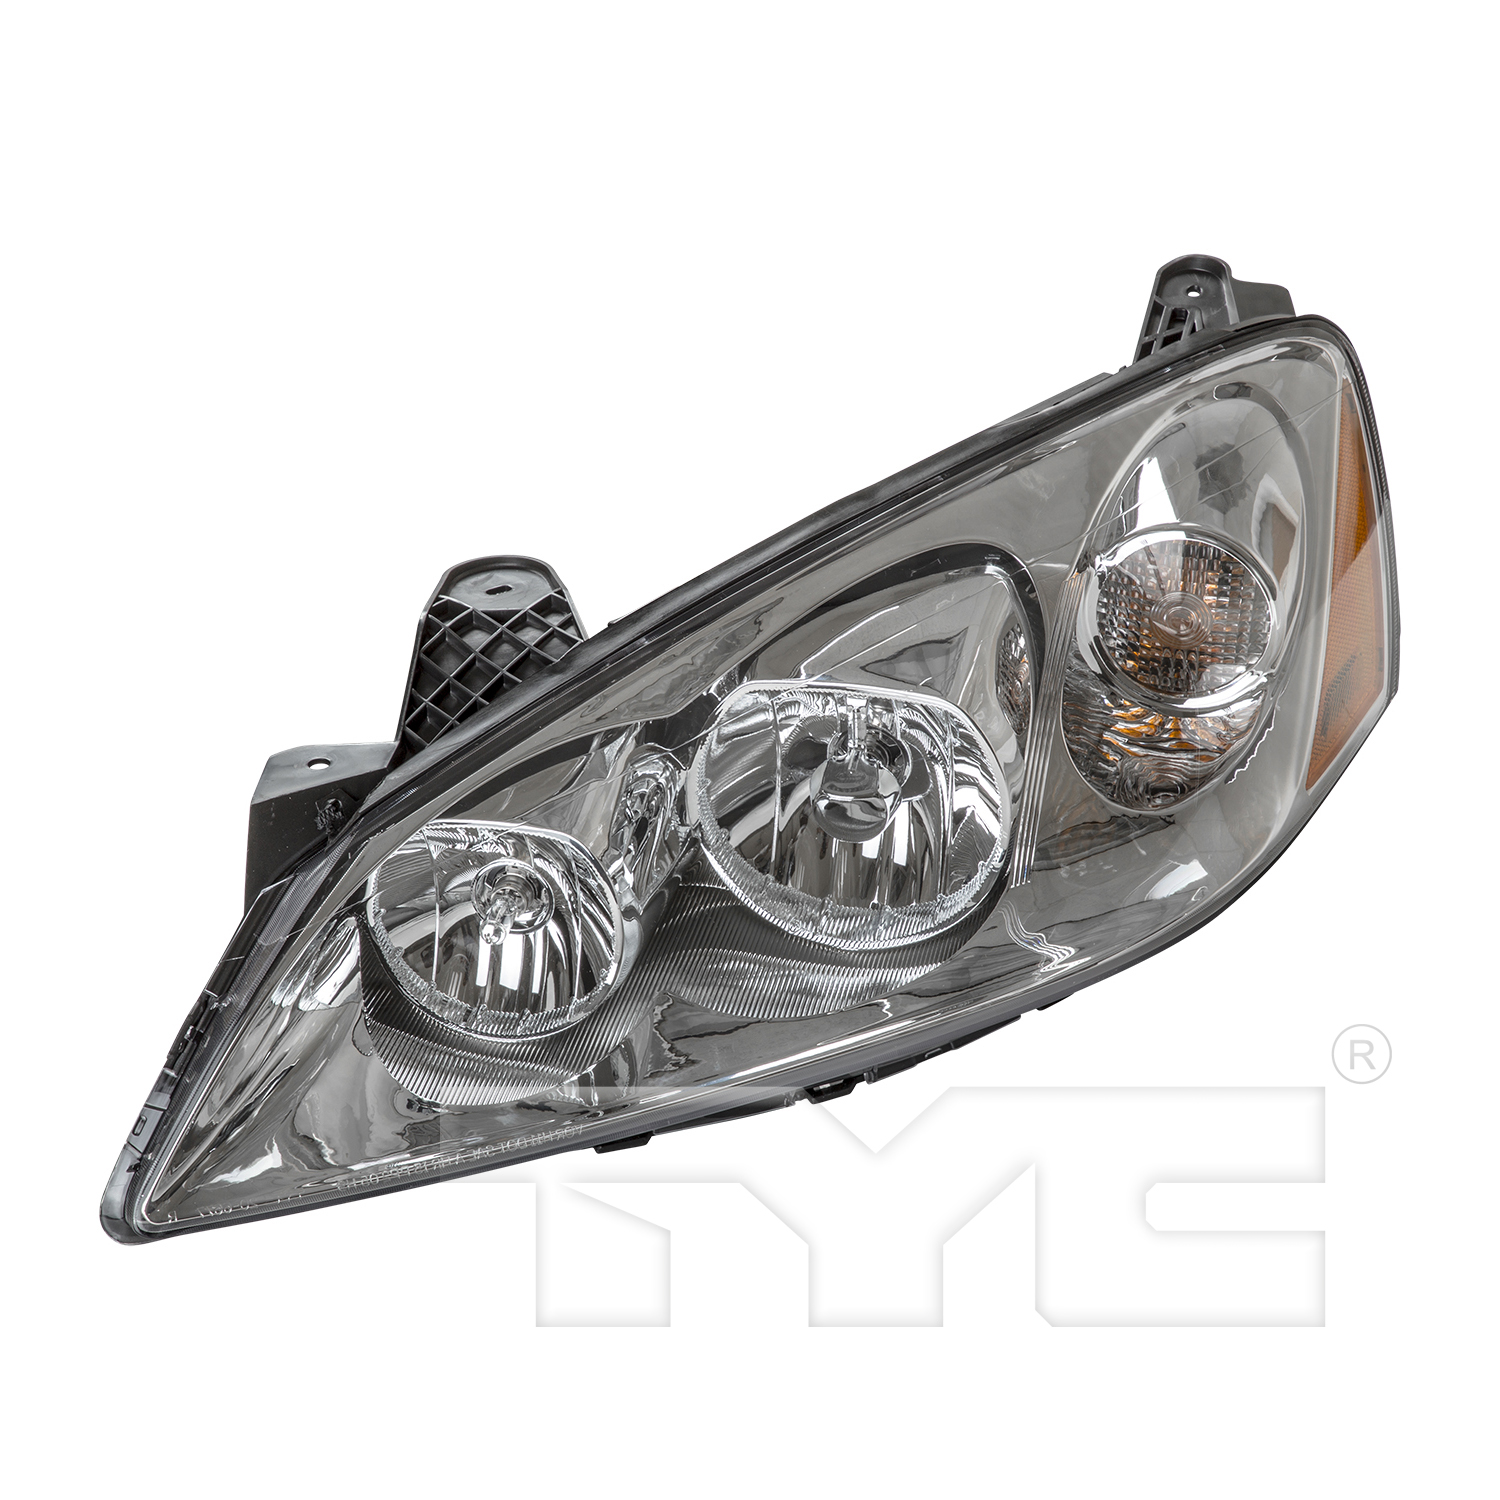 Aftermarket HEADLIGHTS for PONTIAC - G6, G6,08-09,LT Headlamp assy composite